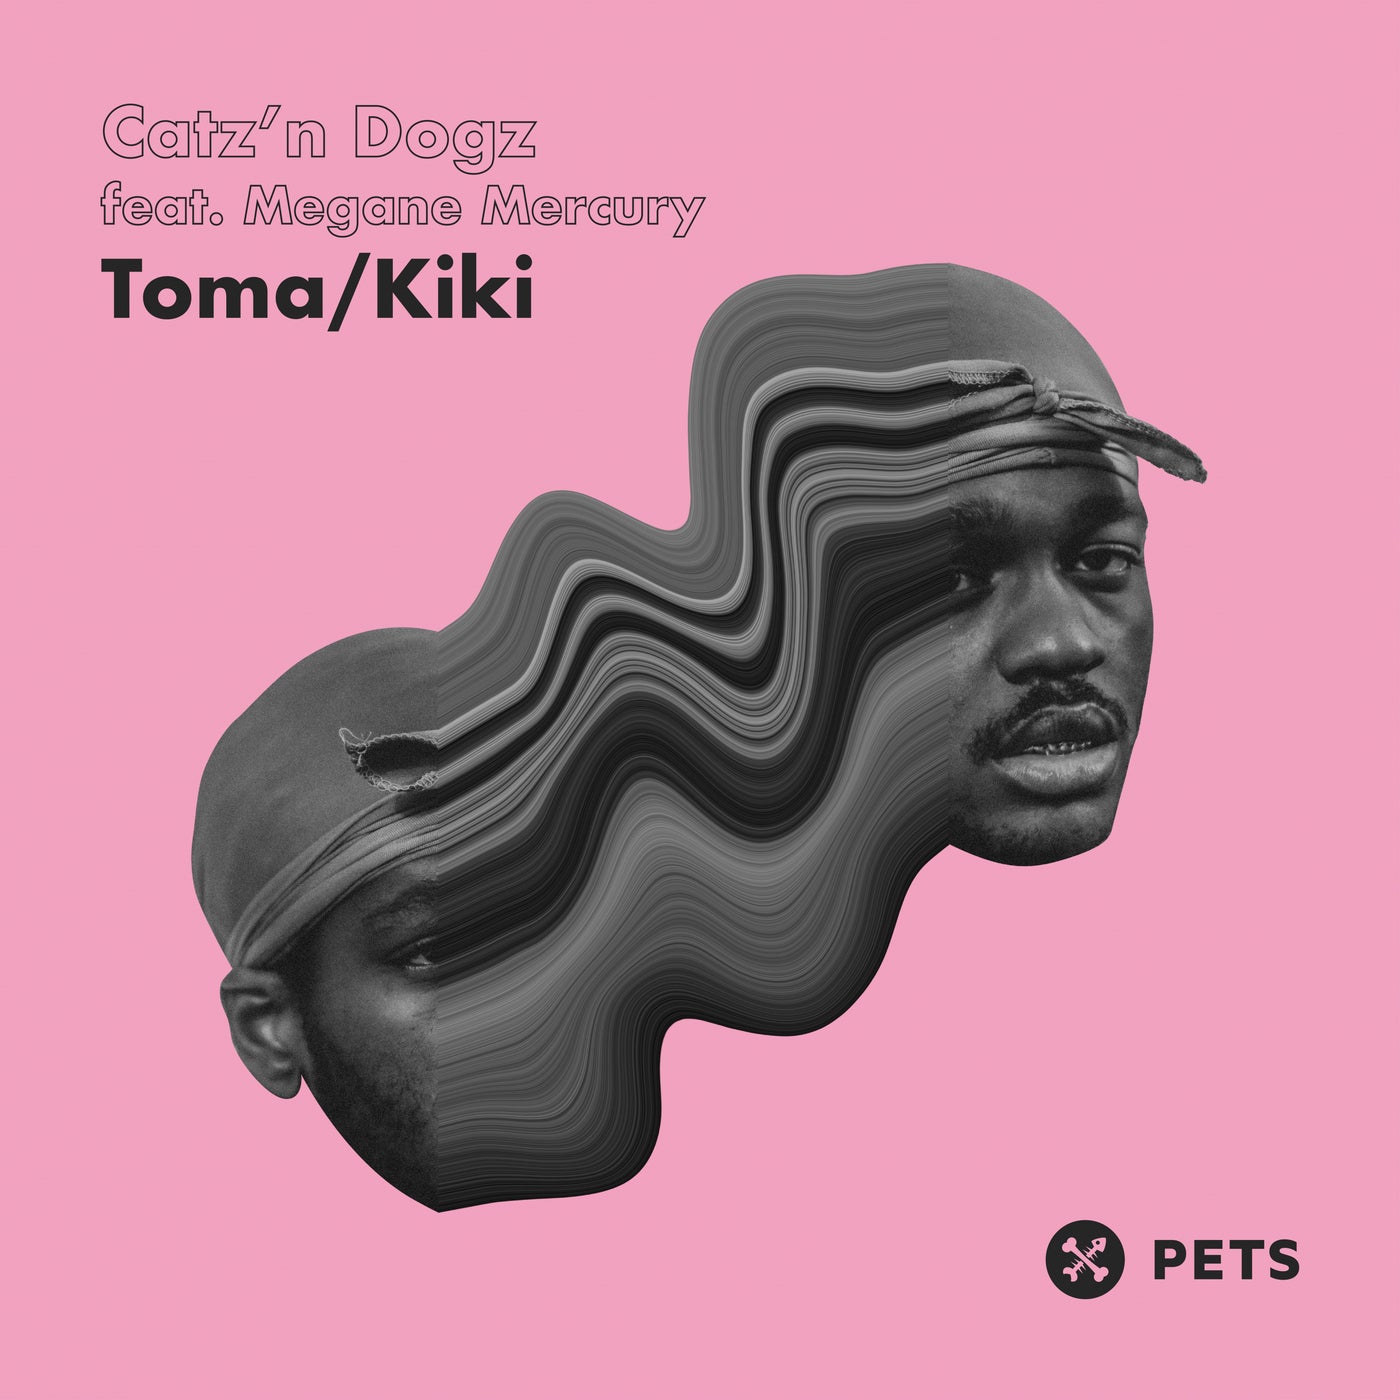 image cover: Catz 'n Dogz, Megane Mercury - Toma / Kiki EP / PETS143